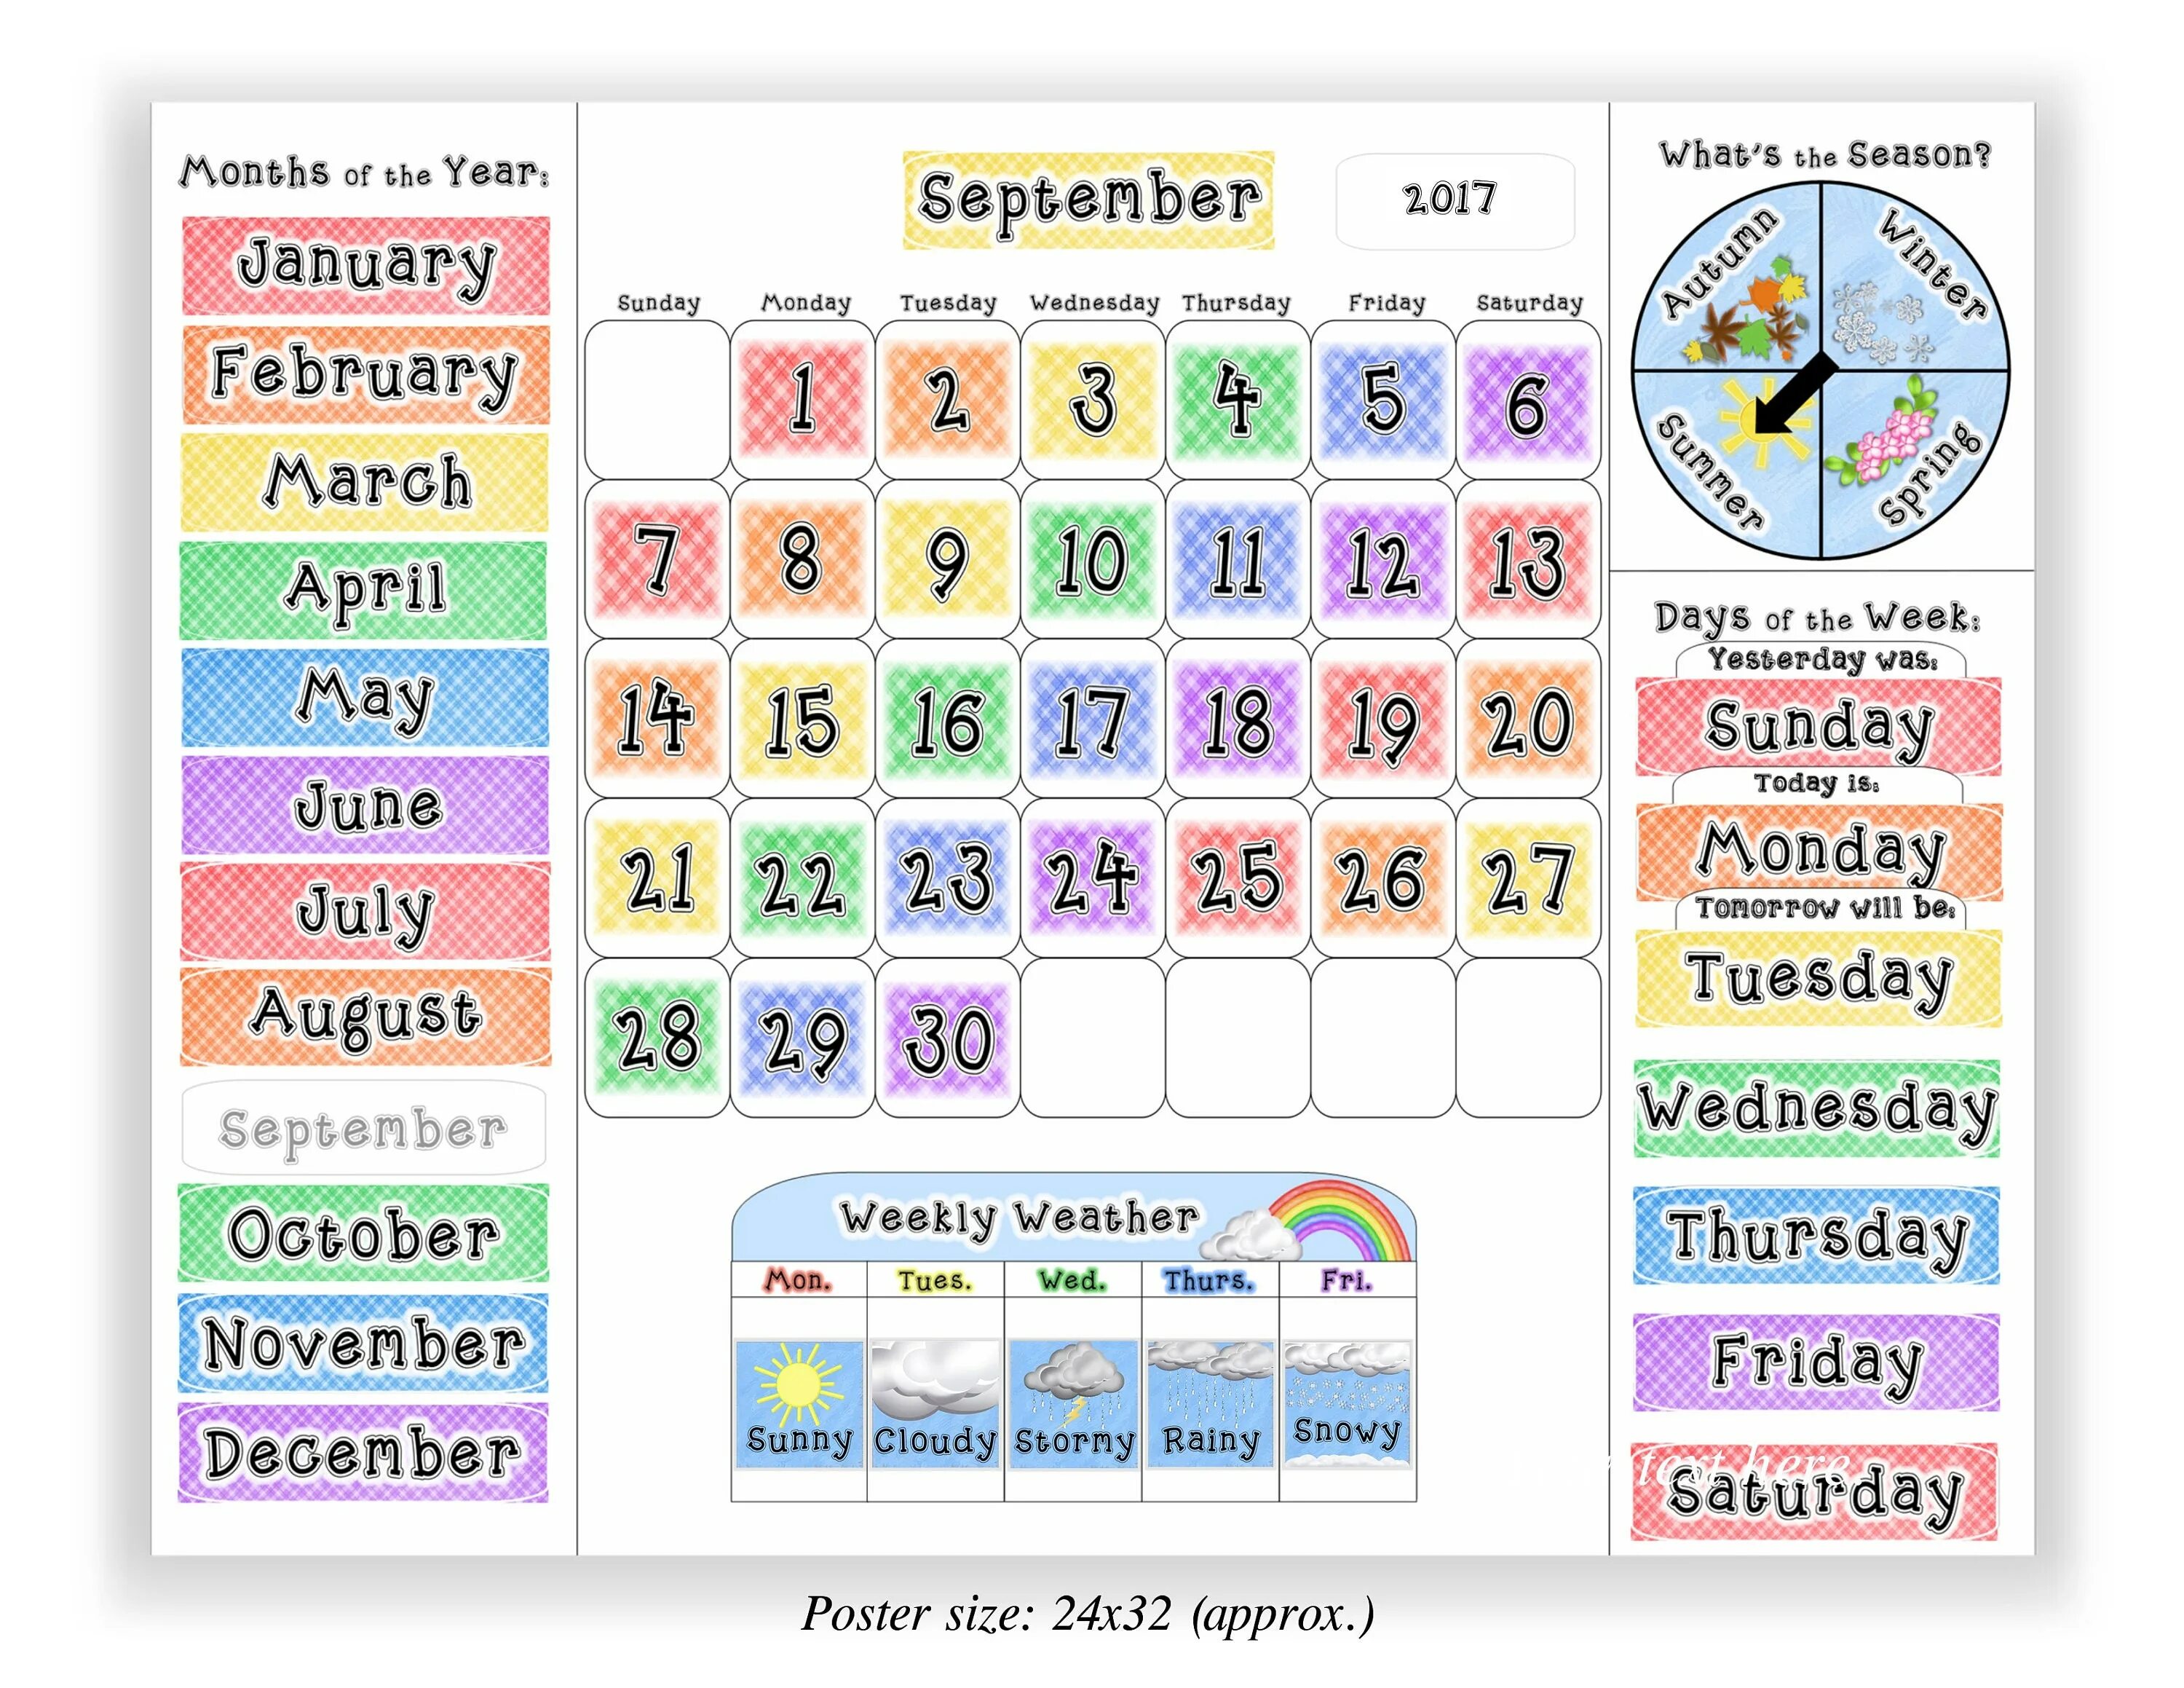 Week month. Календарь English. Календарь на английском. Календарь на английском языке для детей. Calendar for Kids English.